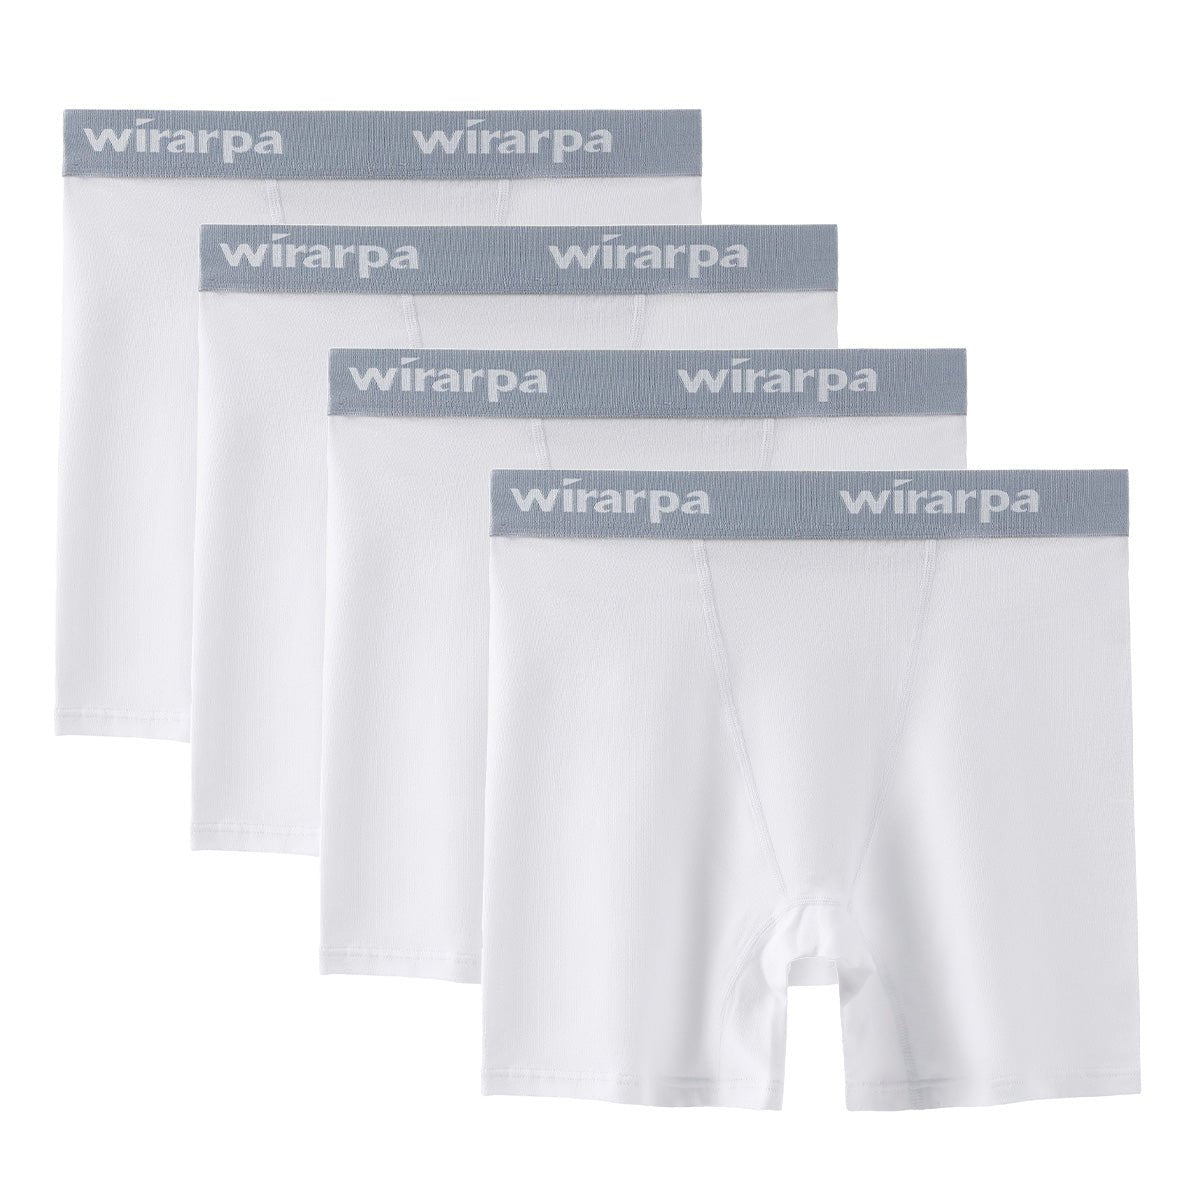 Wirarpa Women's Cotton Anti Chafing Boy Shorts Panties 5.5" Inseam 4 Pack - Wirarpa Apparel, Inc.